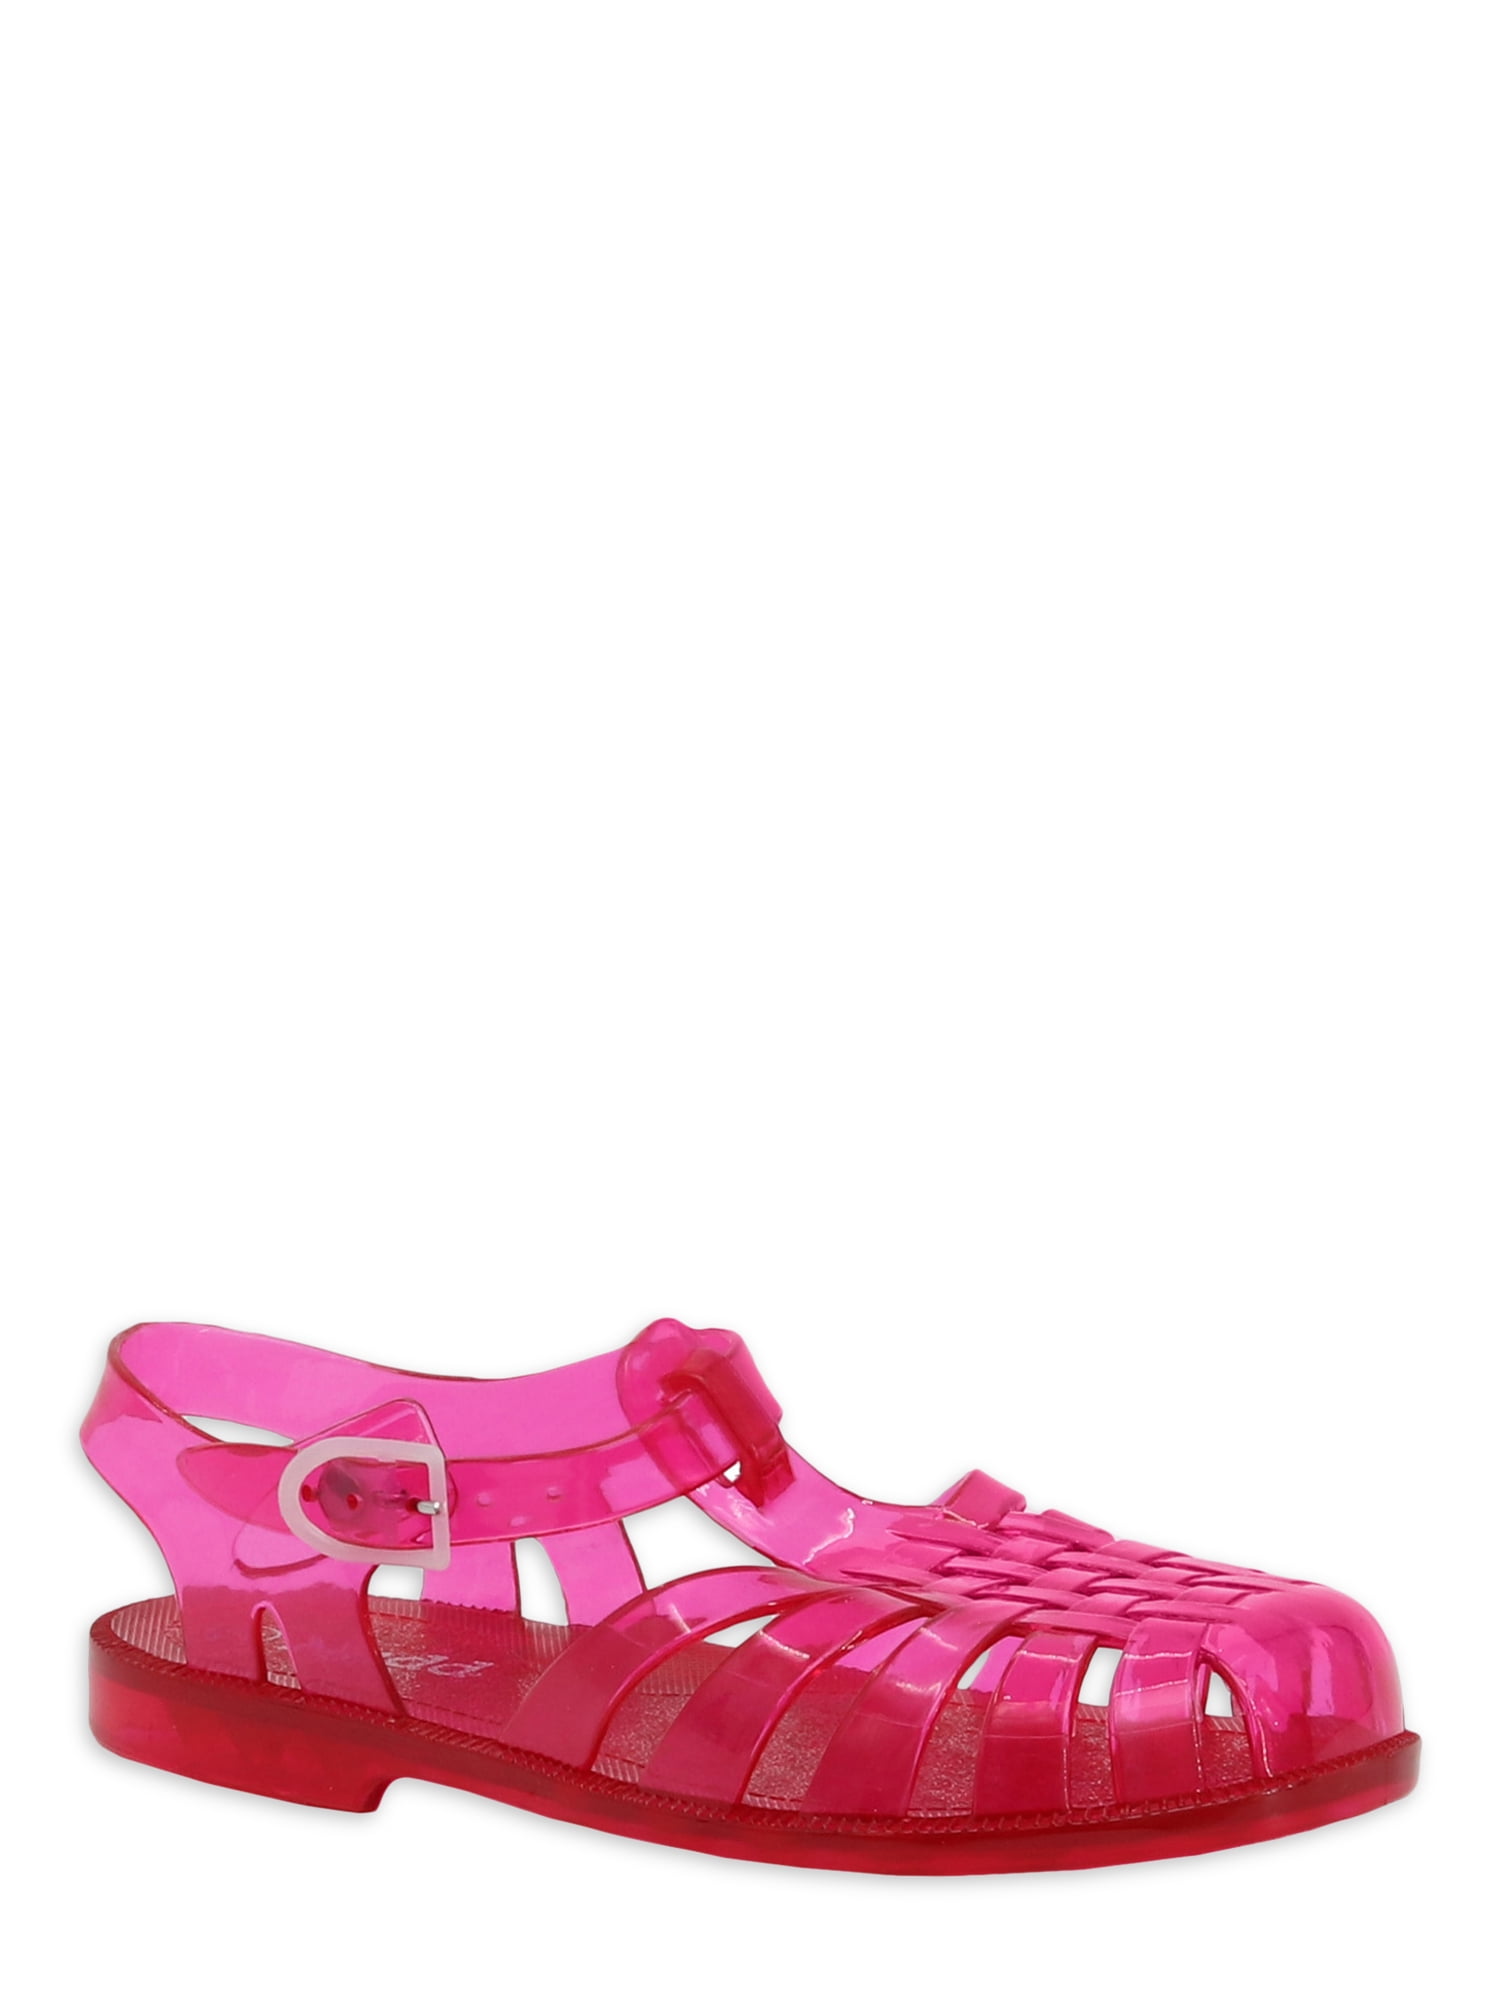 Mudd Little & Big Girls Jelly Fisherman Sandals, Sizes 13-4 - Walmart.com